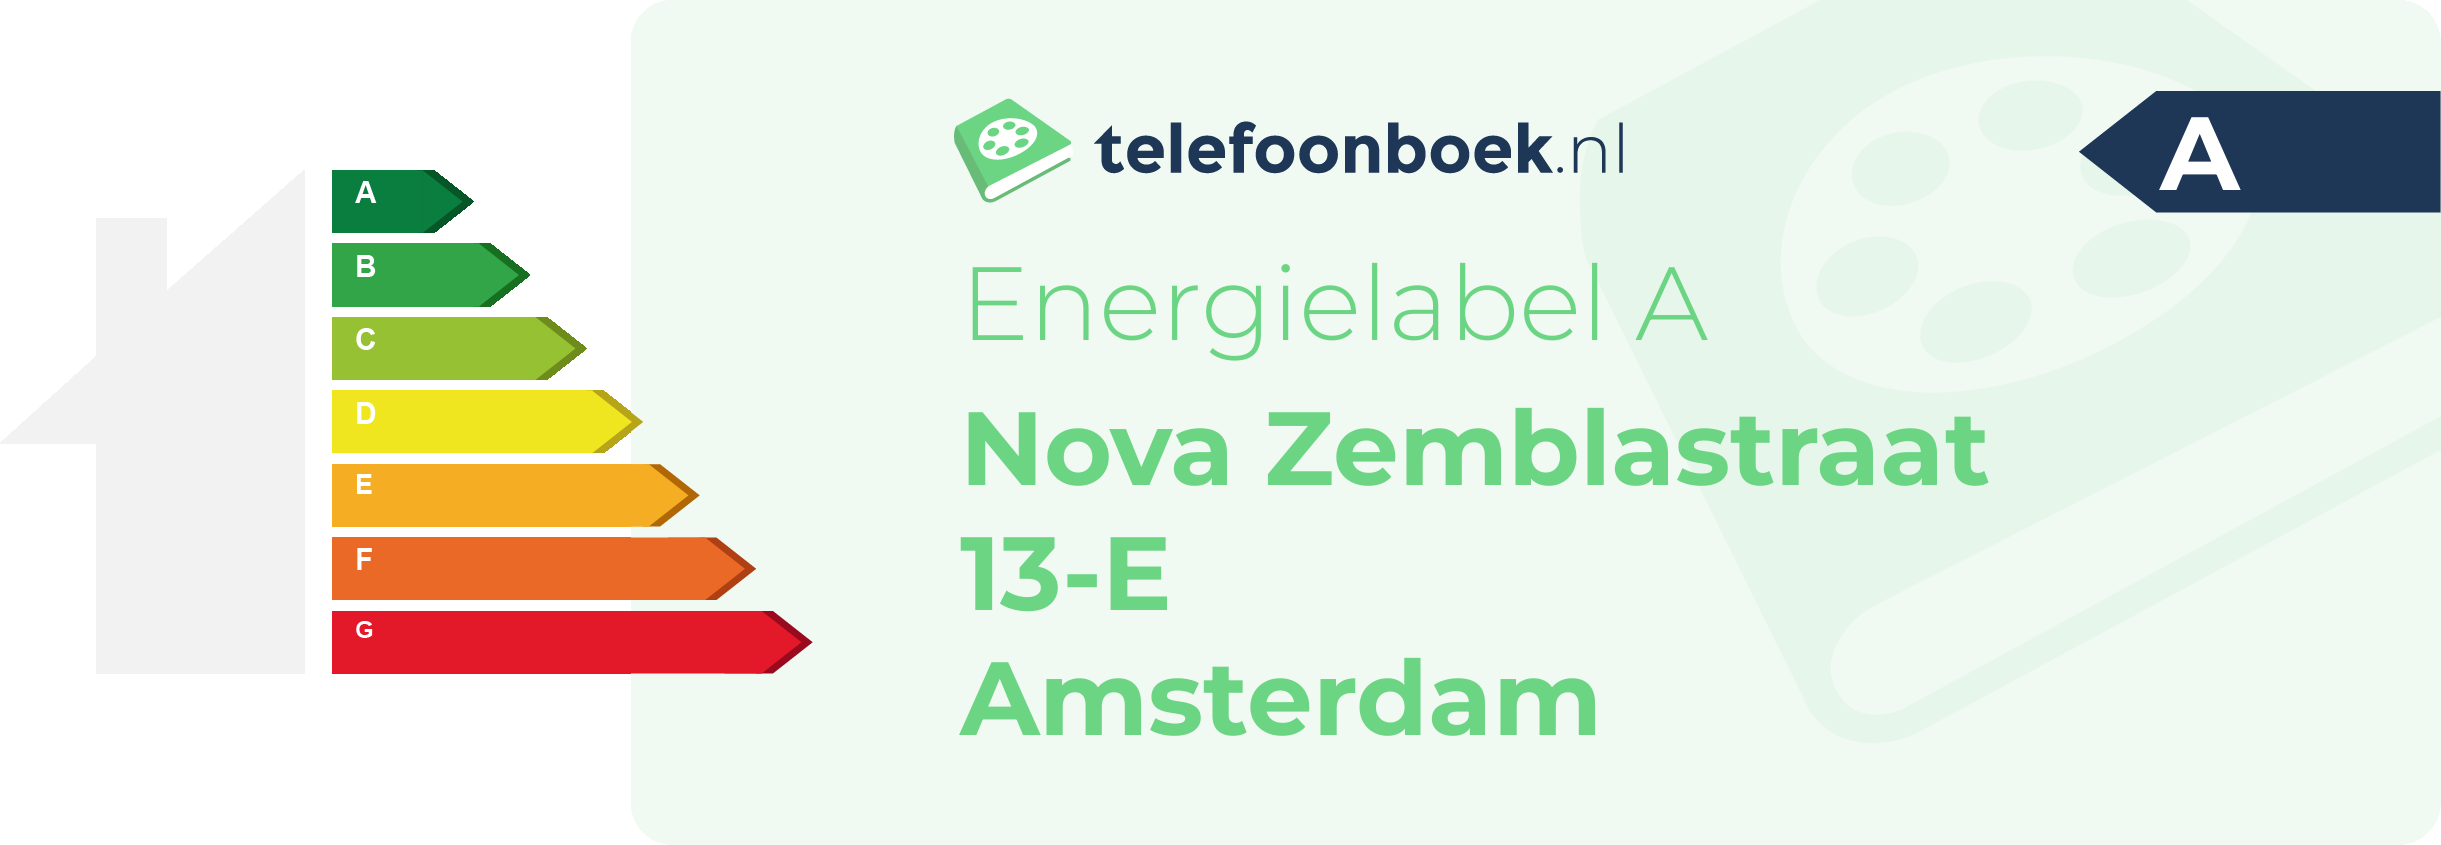 Energielabel Nova Zemblastraat 13-E Amsterdam